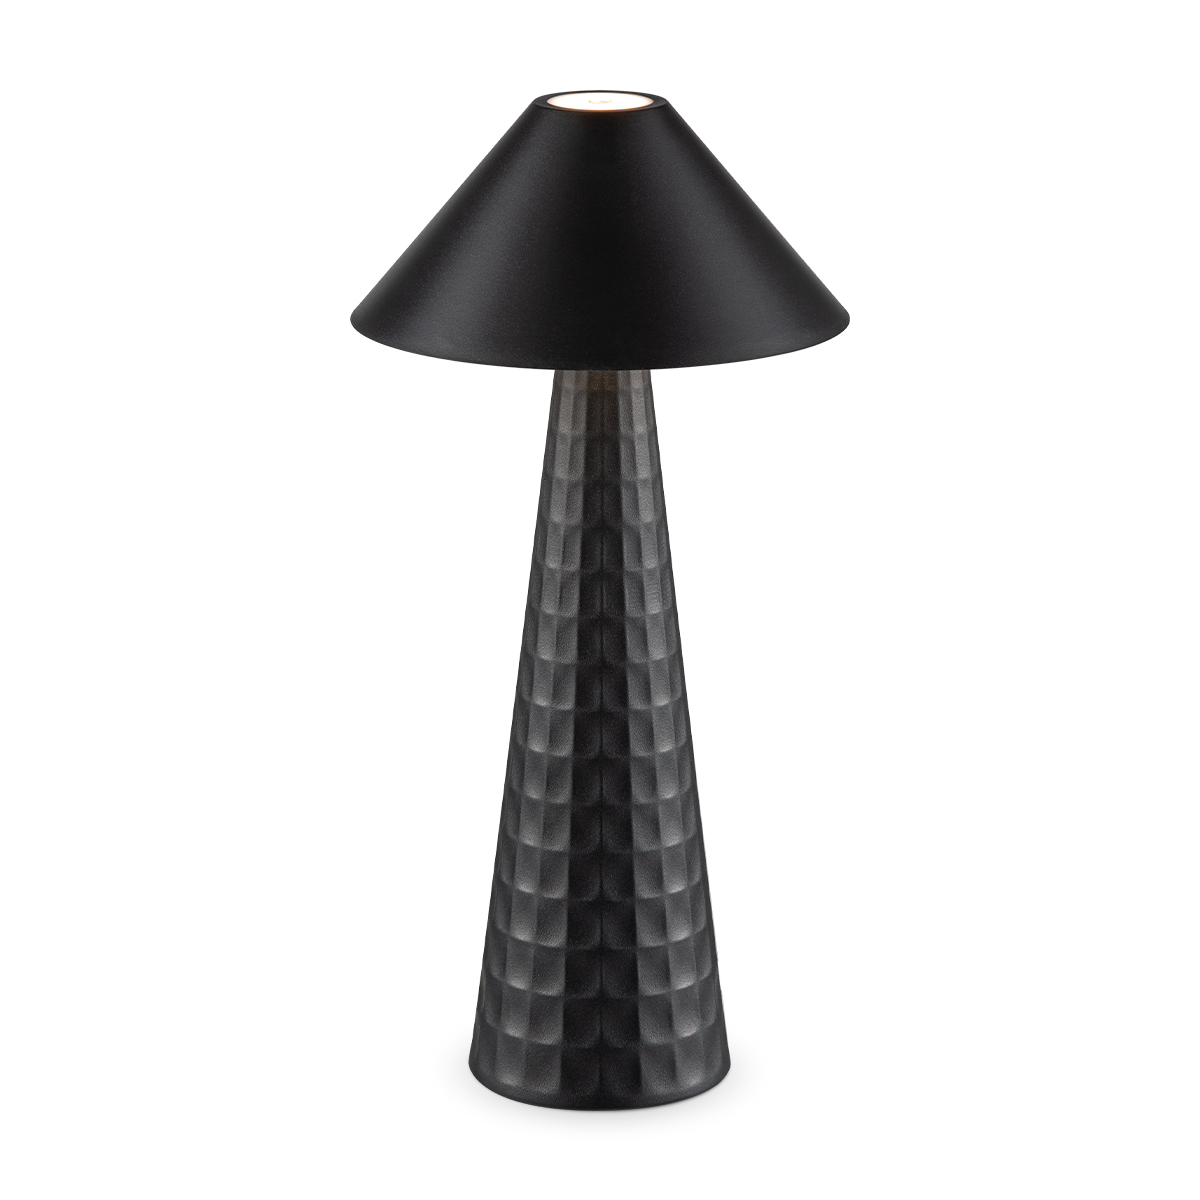 Tangla lighting - TLT7645-01BK - LED table lamp - rechargeable plastic and metal - black - mushroom